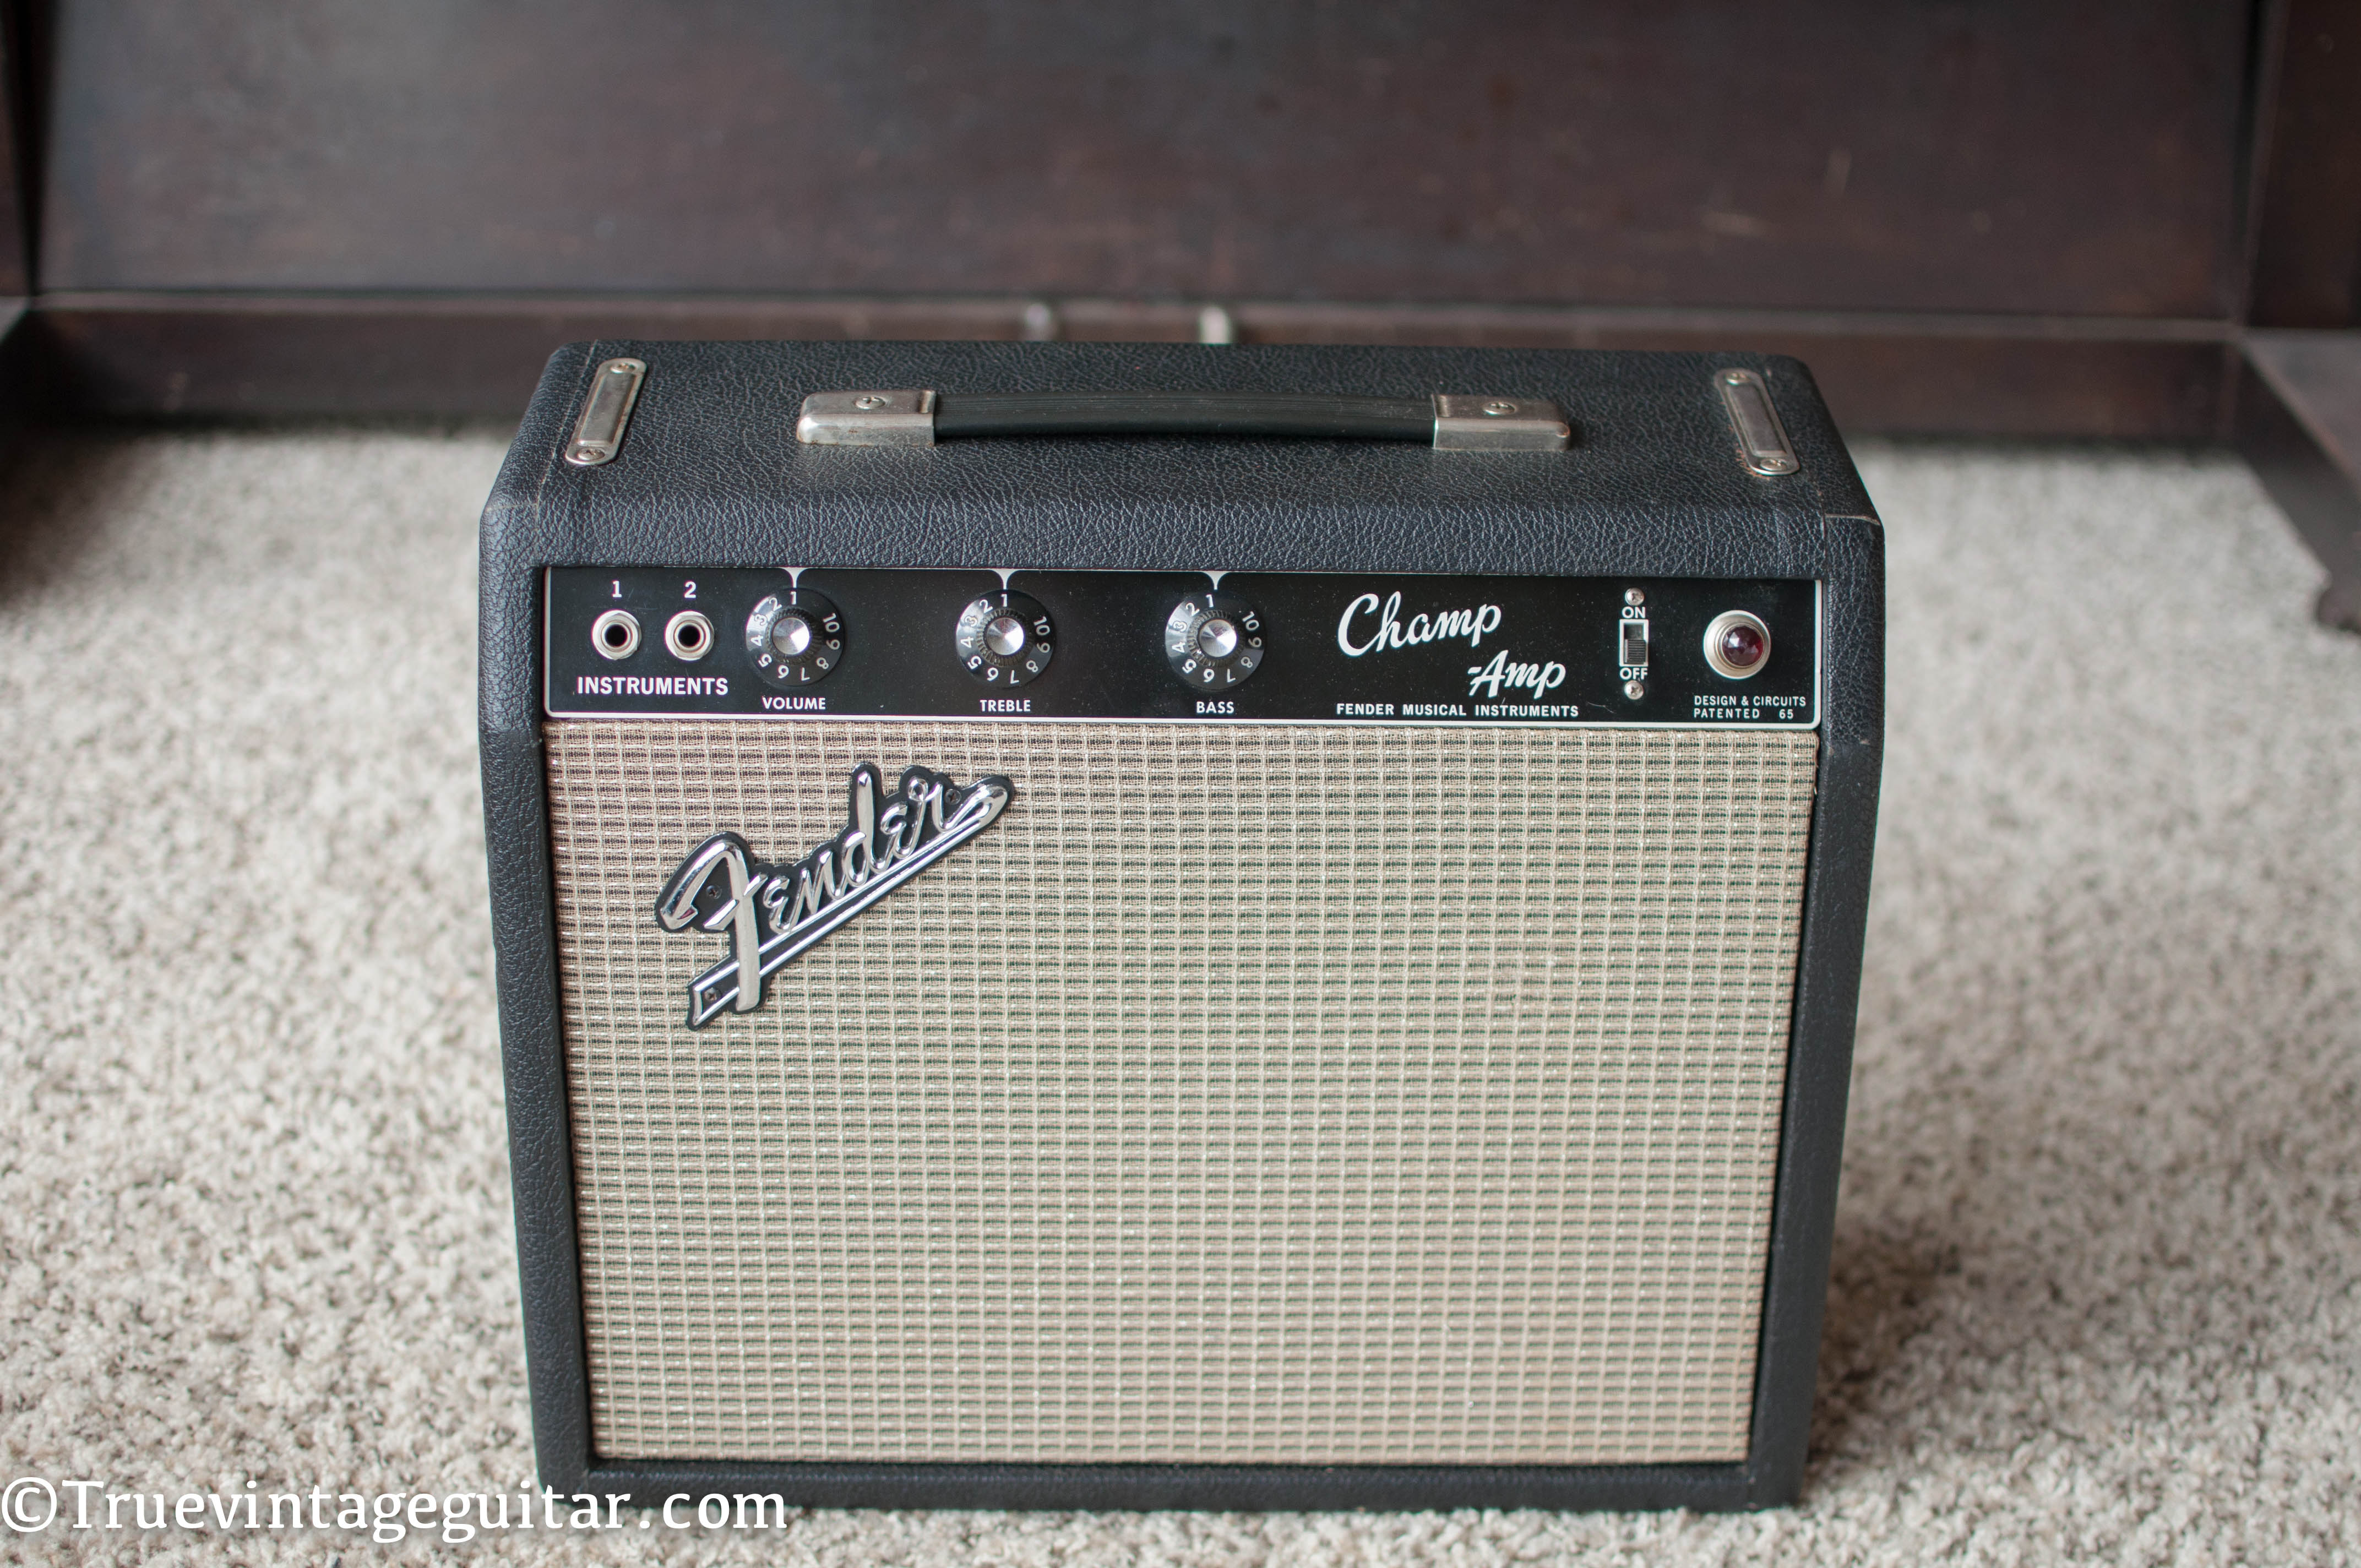 Vintage 1966 Fender Champ guitar amp speaker